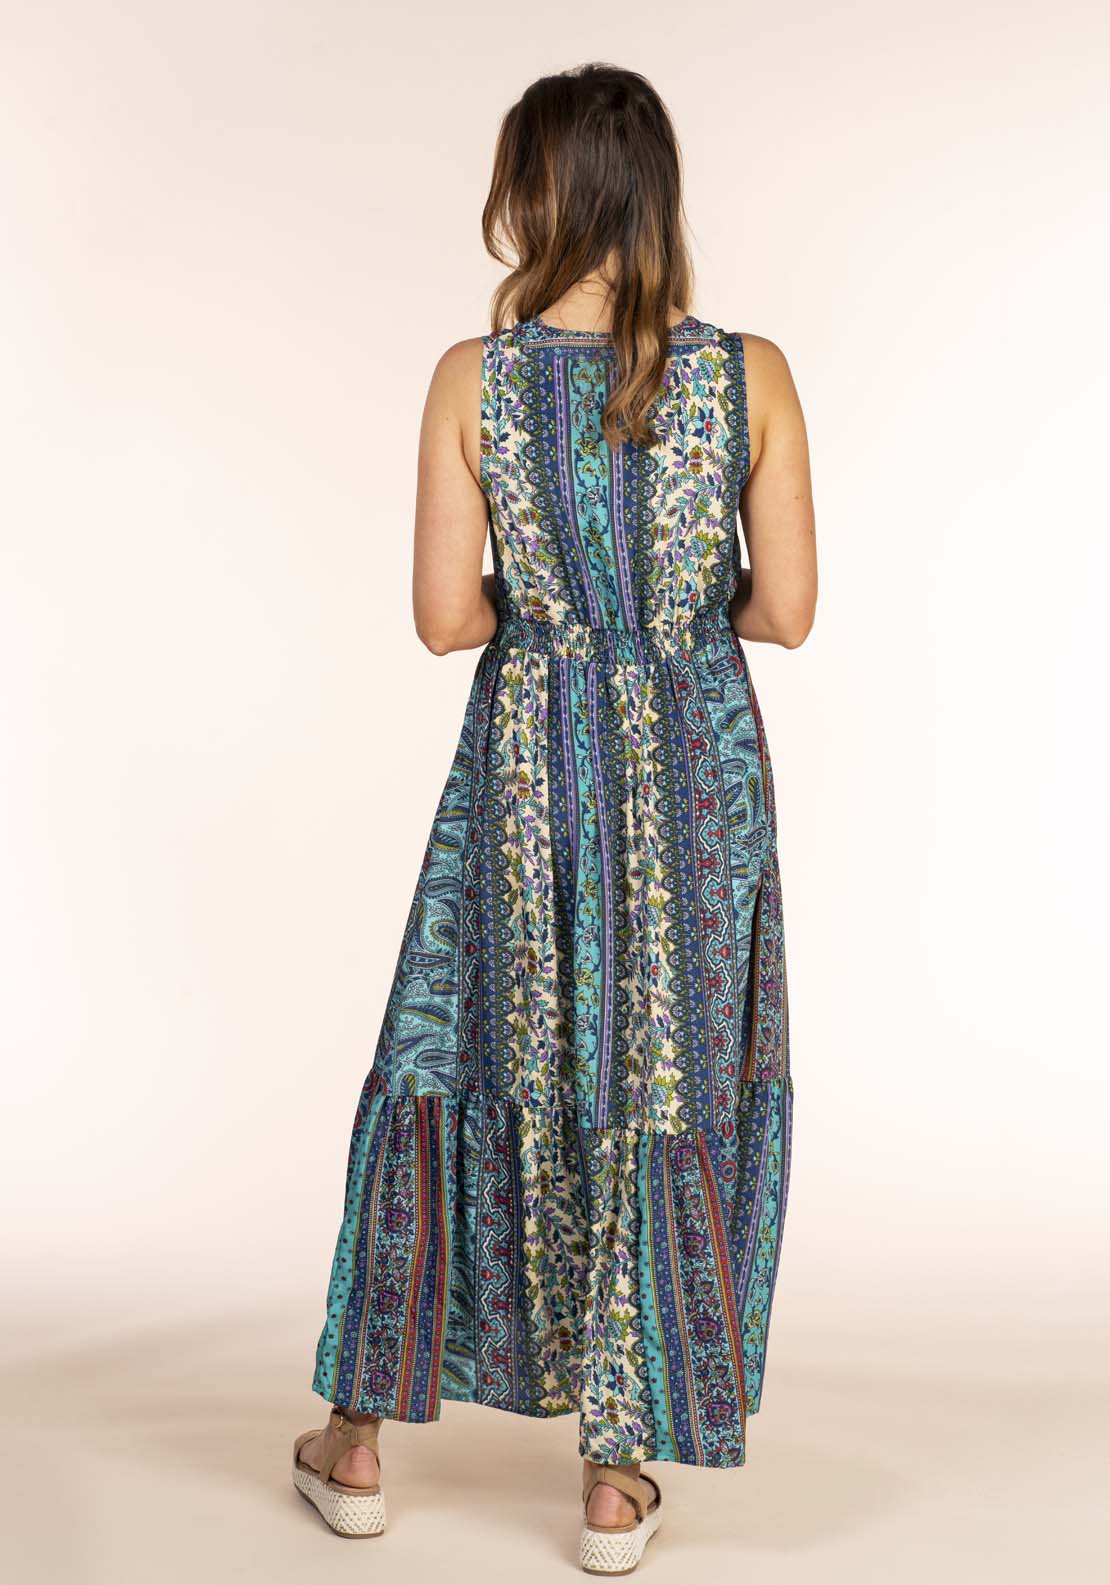 Naoise Sleeveless Tier Dress - Blue 5 Shaws Department Stores